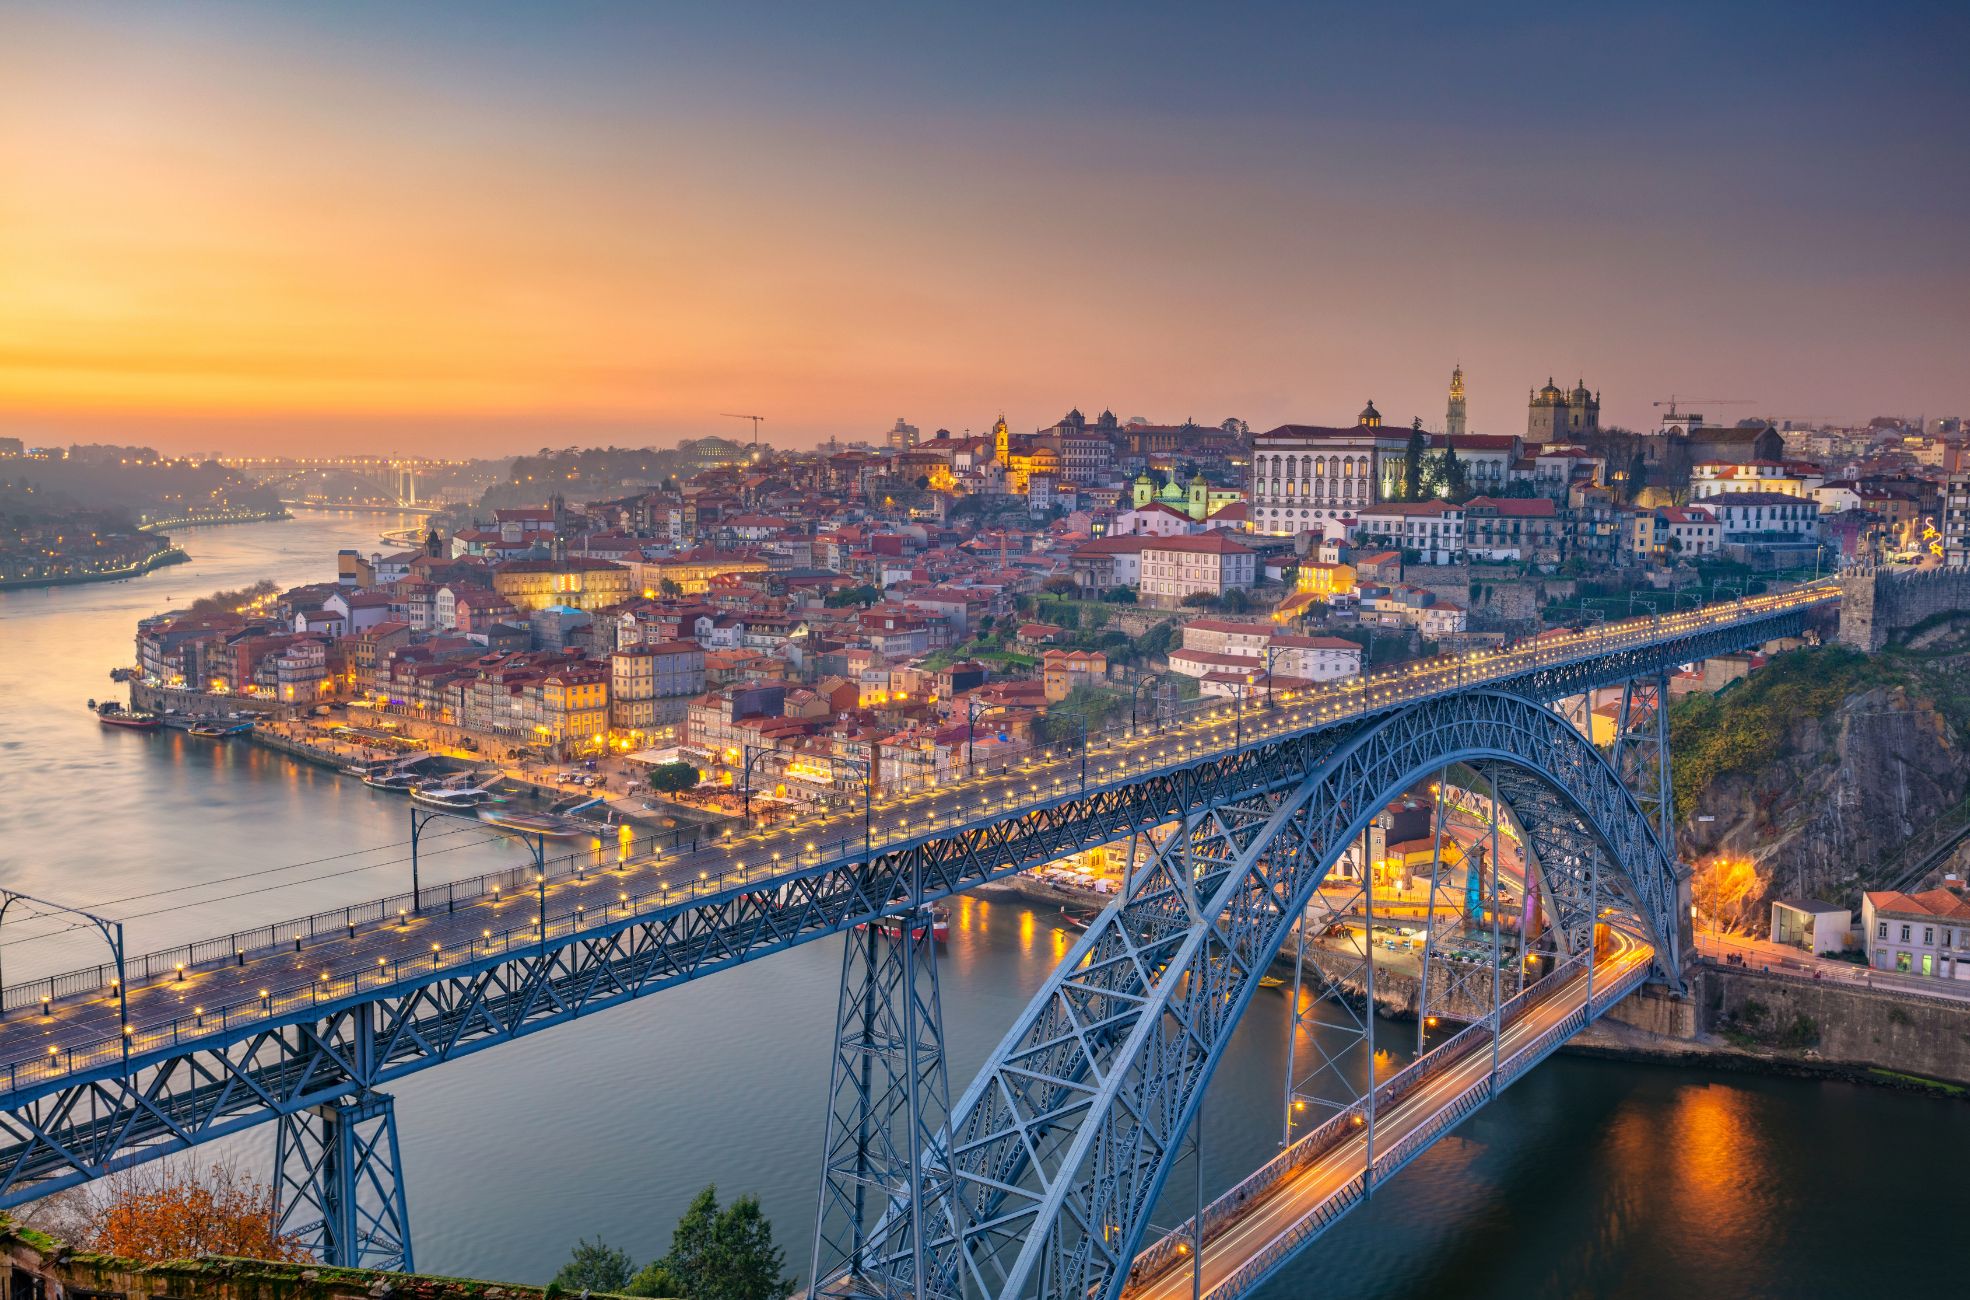 City And Bridge In Portugal